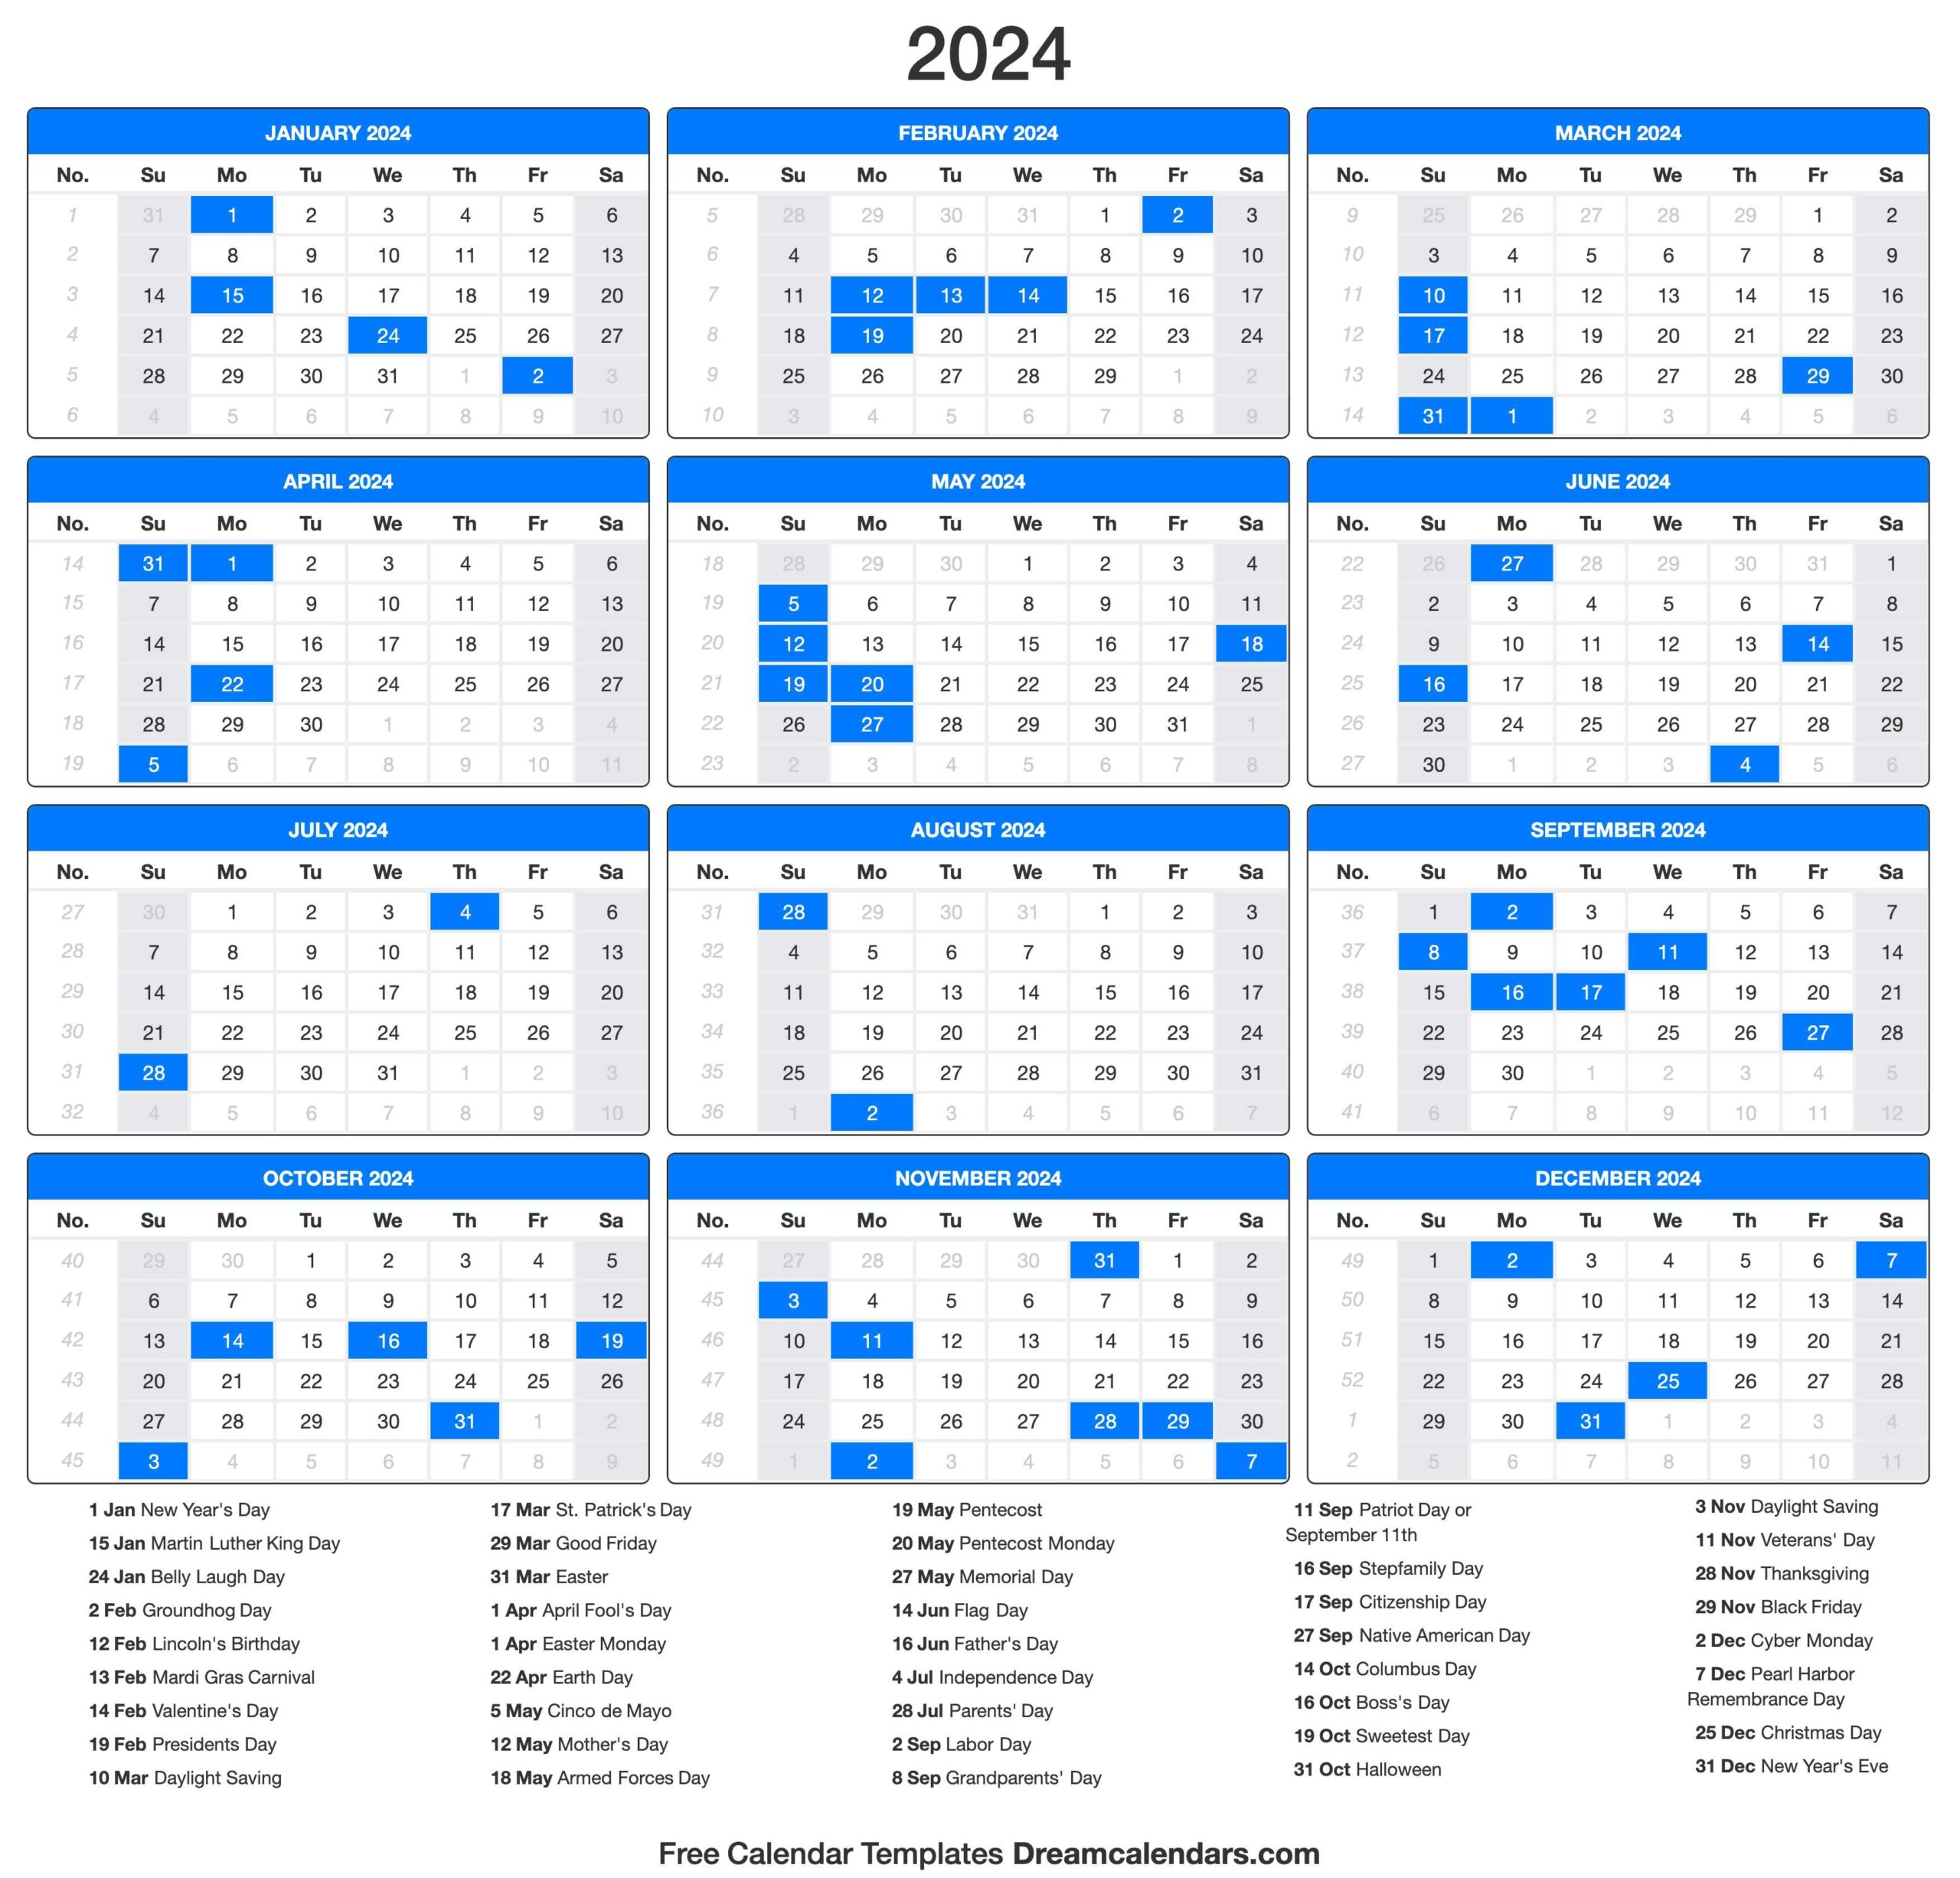 2024 Calendar - Free Printable 2024 Calendar With Previous And Next Month Shown